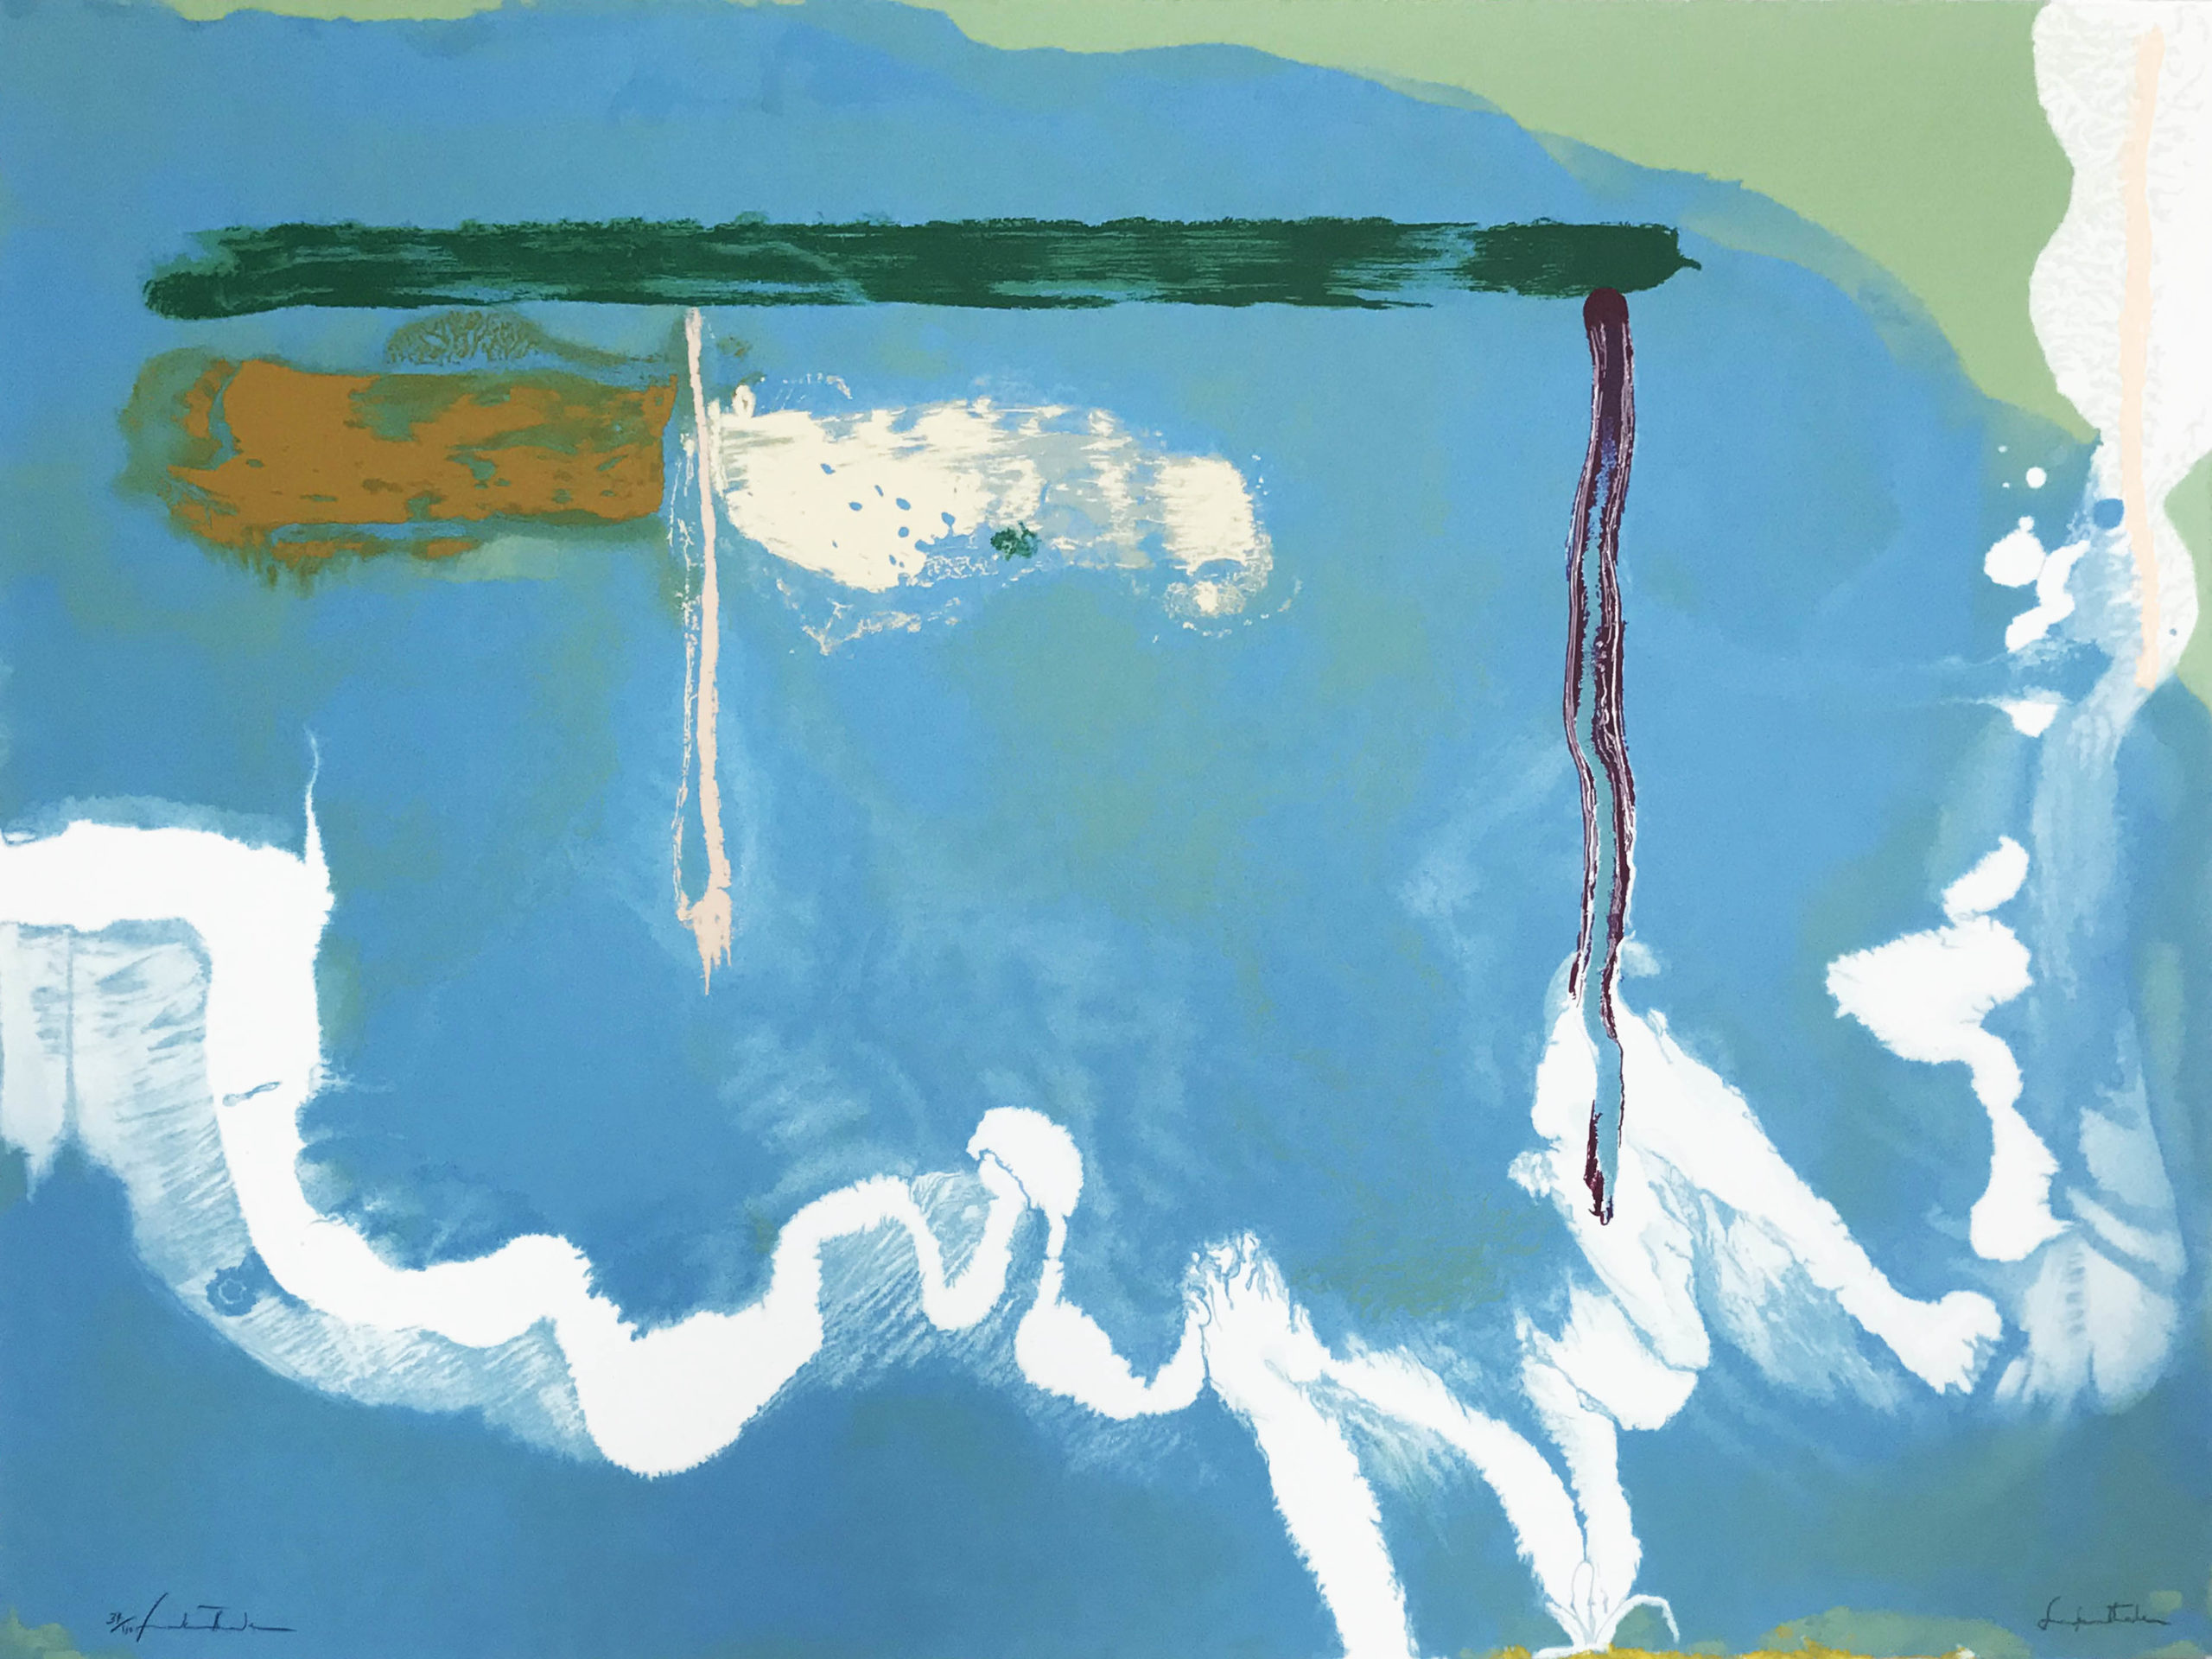 Helen Frankenthaler | Skywriting